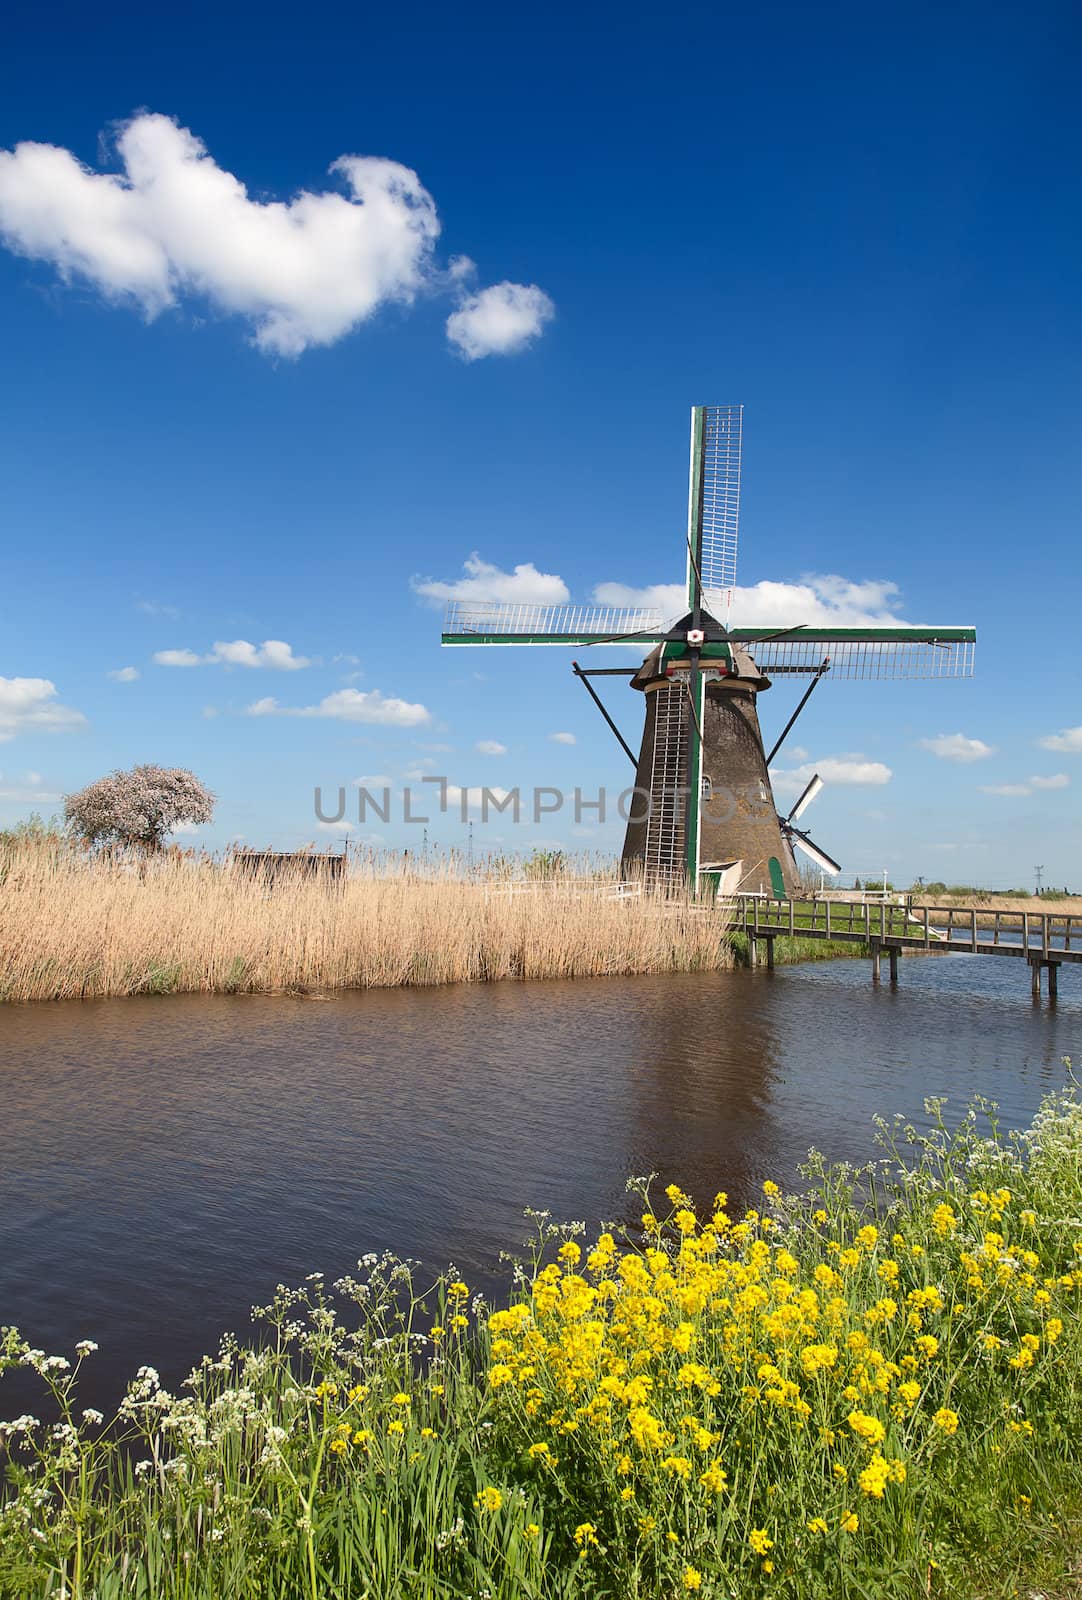 Windmill by swisshippo